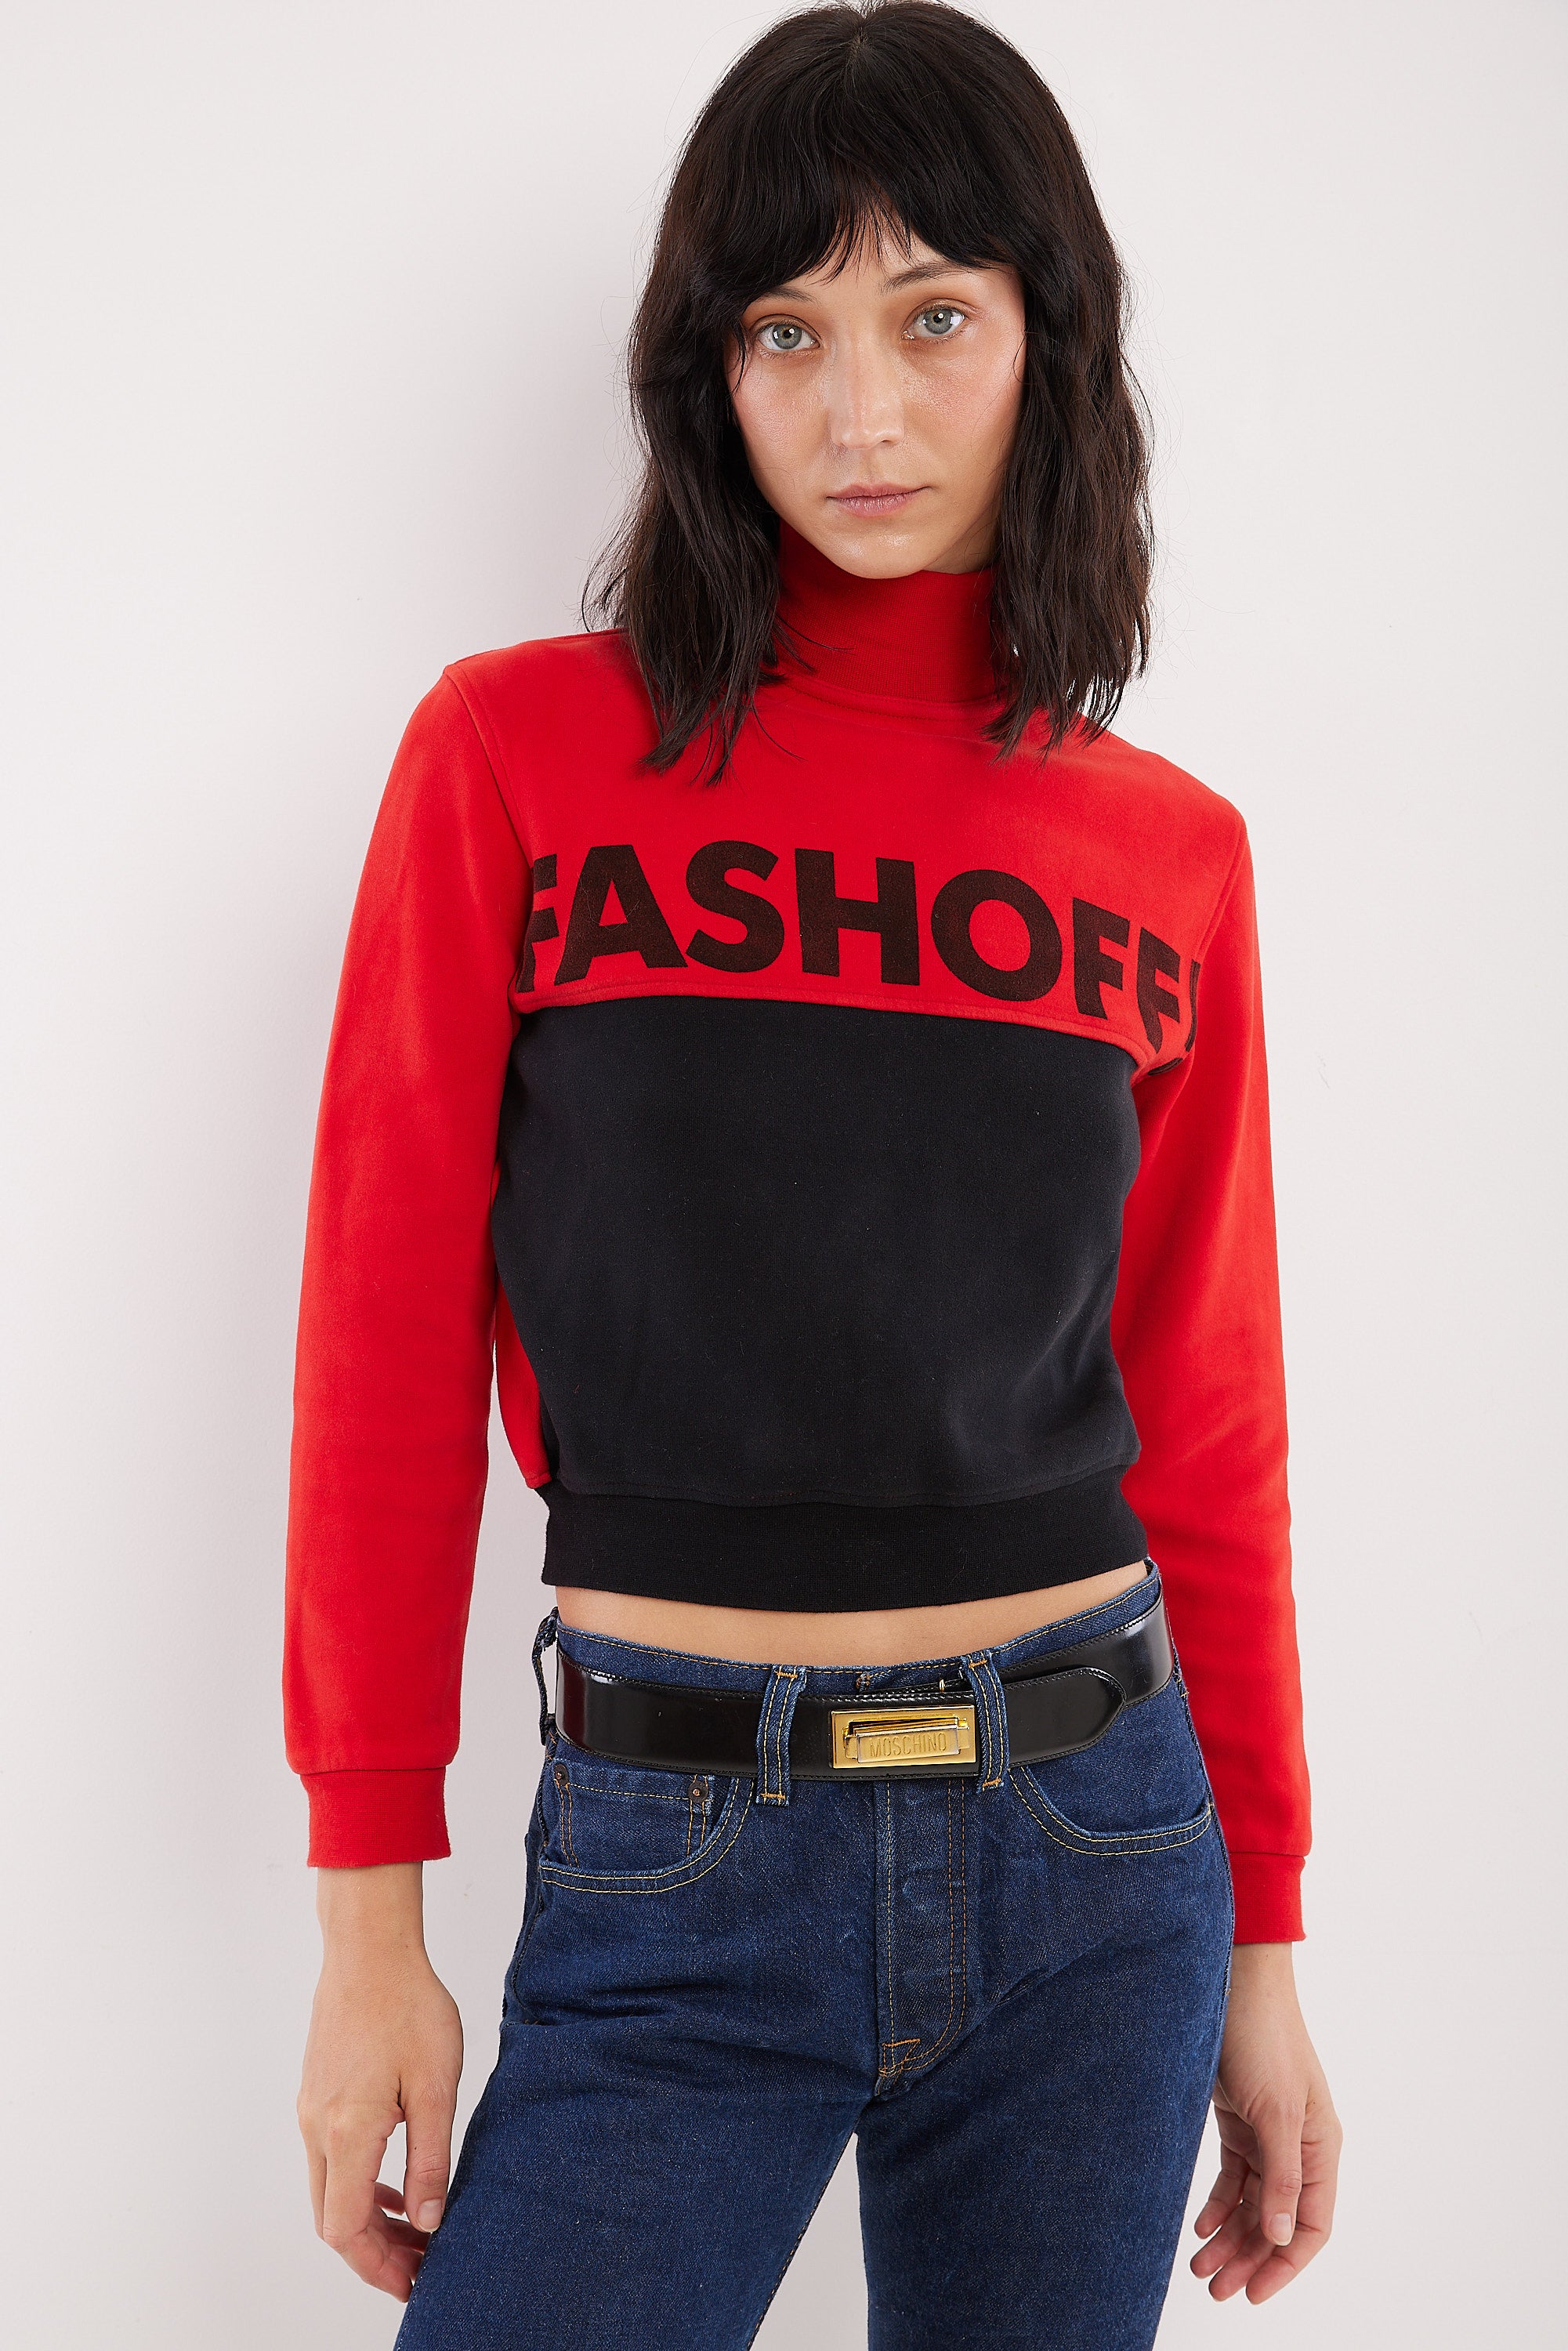 Moschino <br> S/S 1992 'Fashoff' logo colourblock sweater